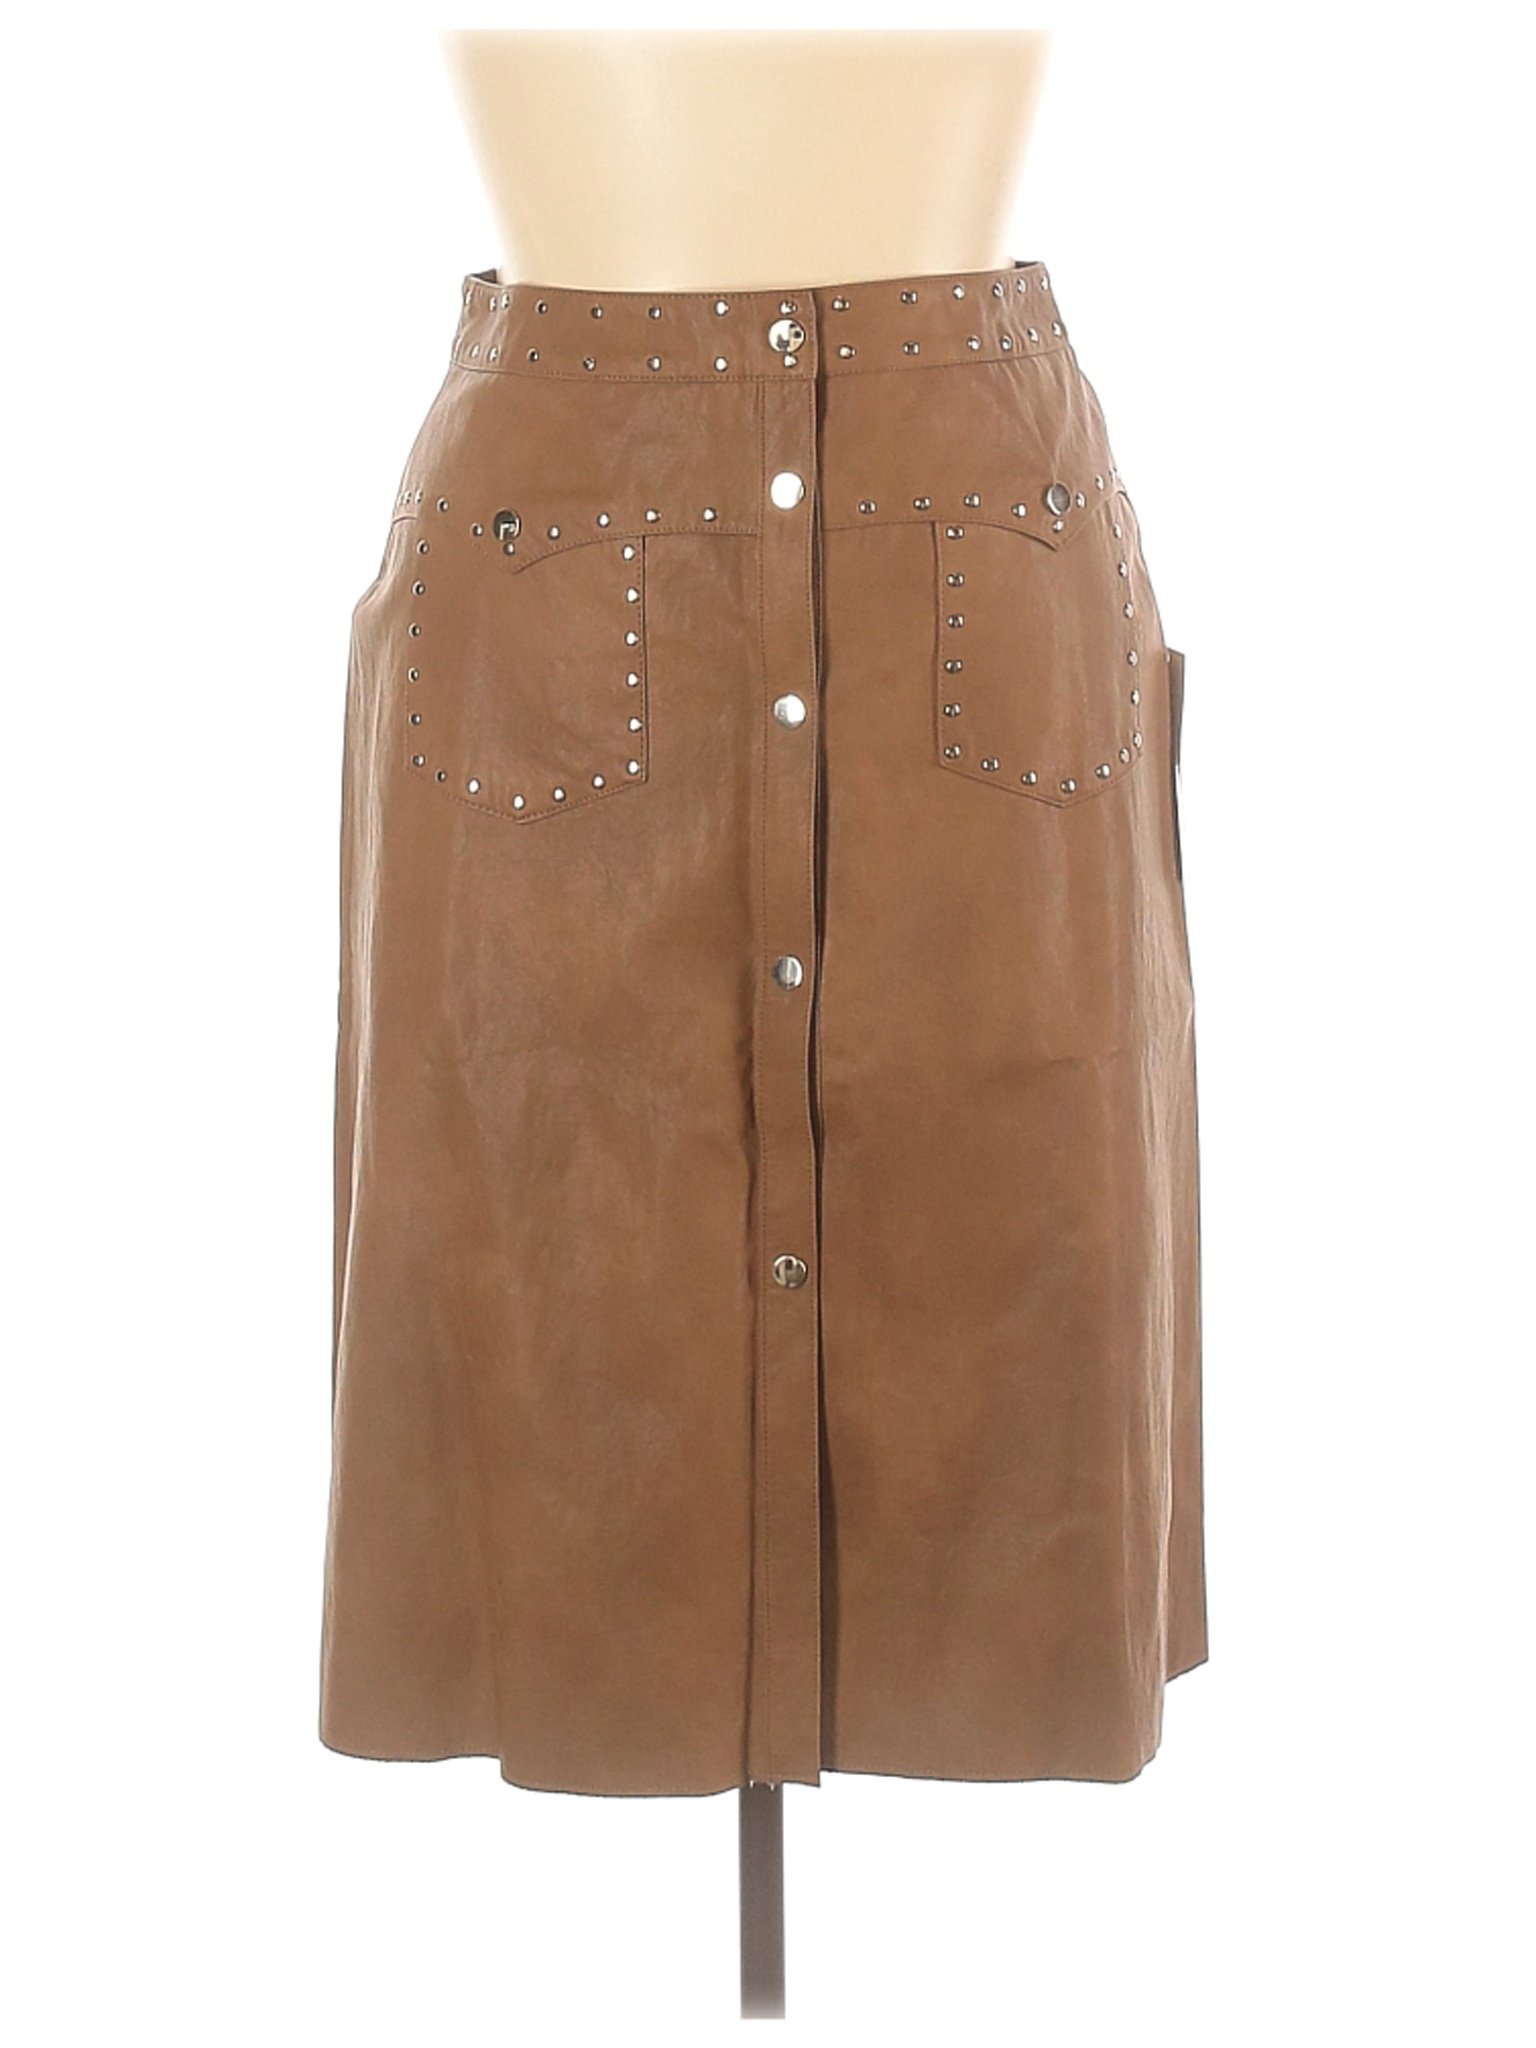 Nwt Zara Women Brown Faux Leather Skirt Xl Ebay